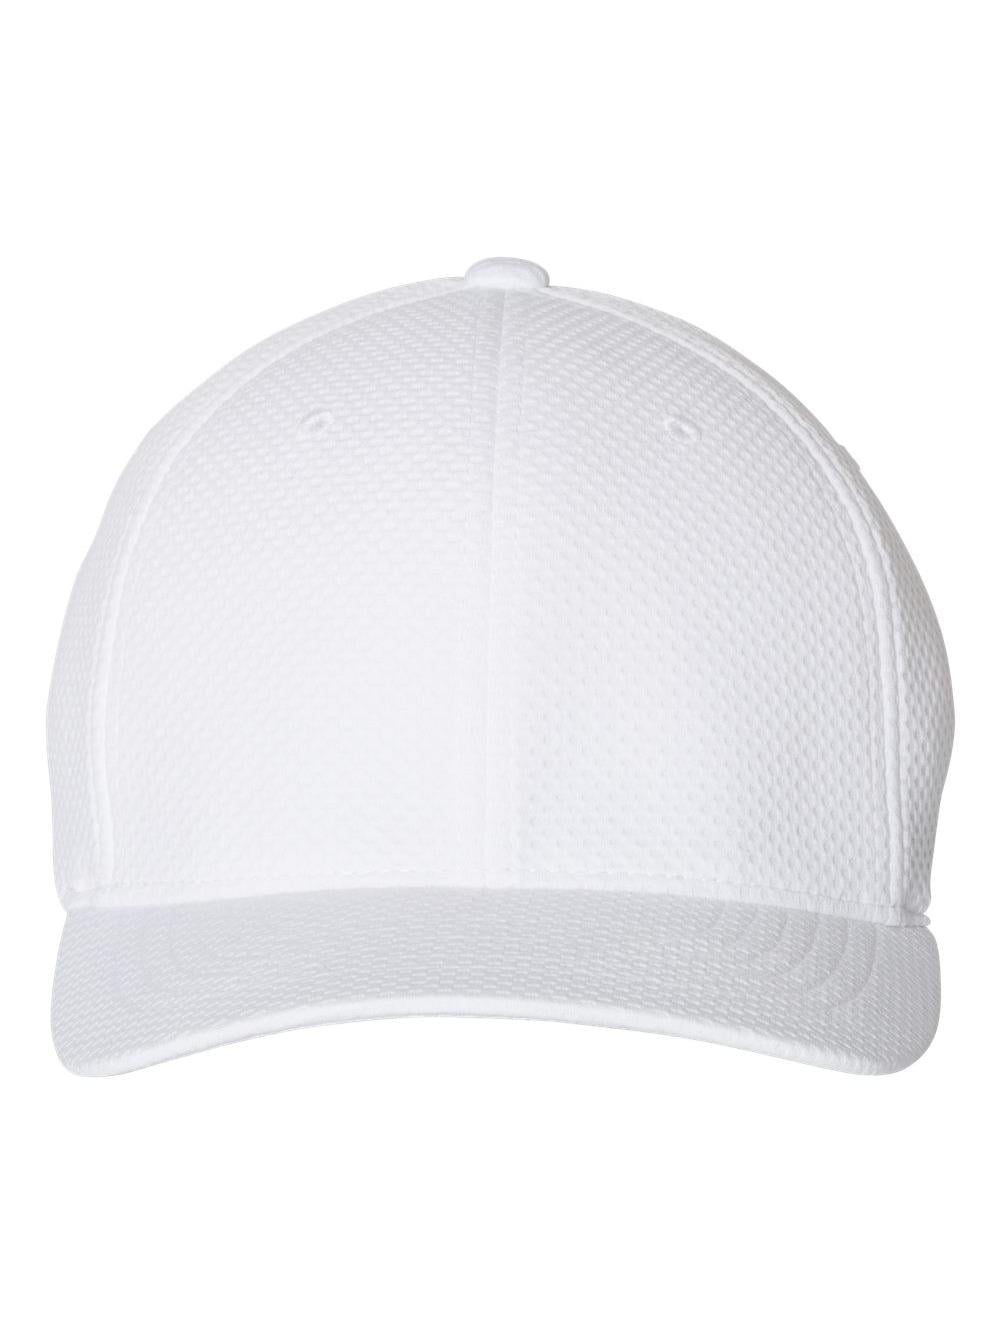 - L/XL 3D & Cool Dry - Flexfit Jersey Cap Hexagon WHITE